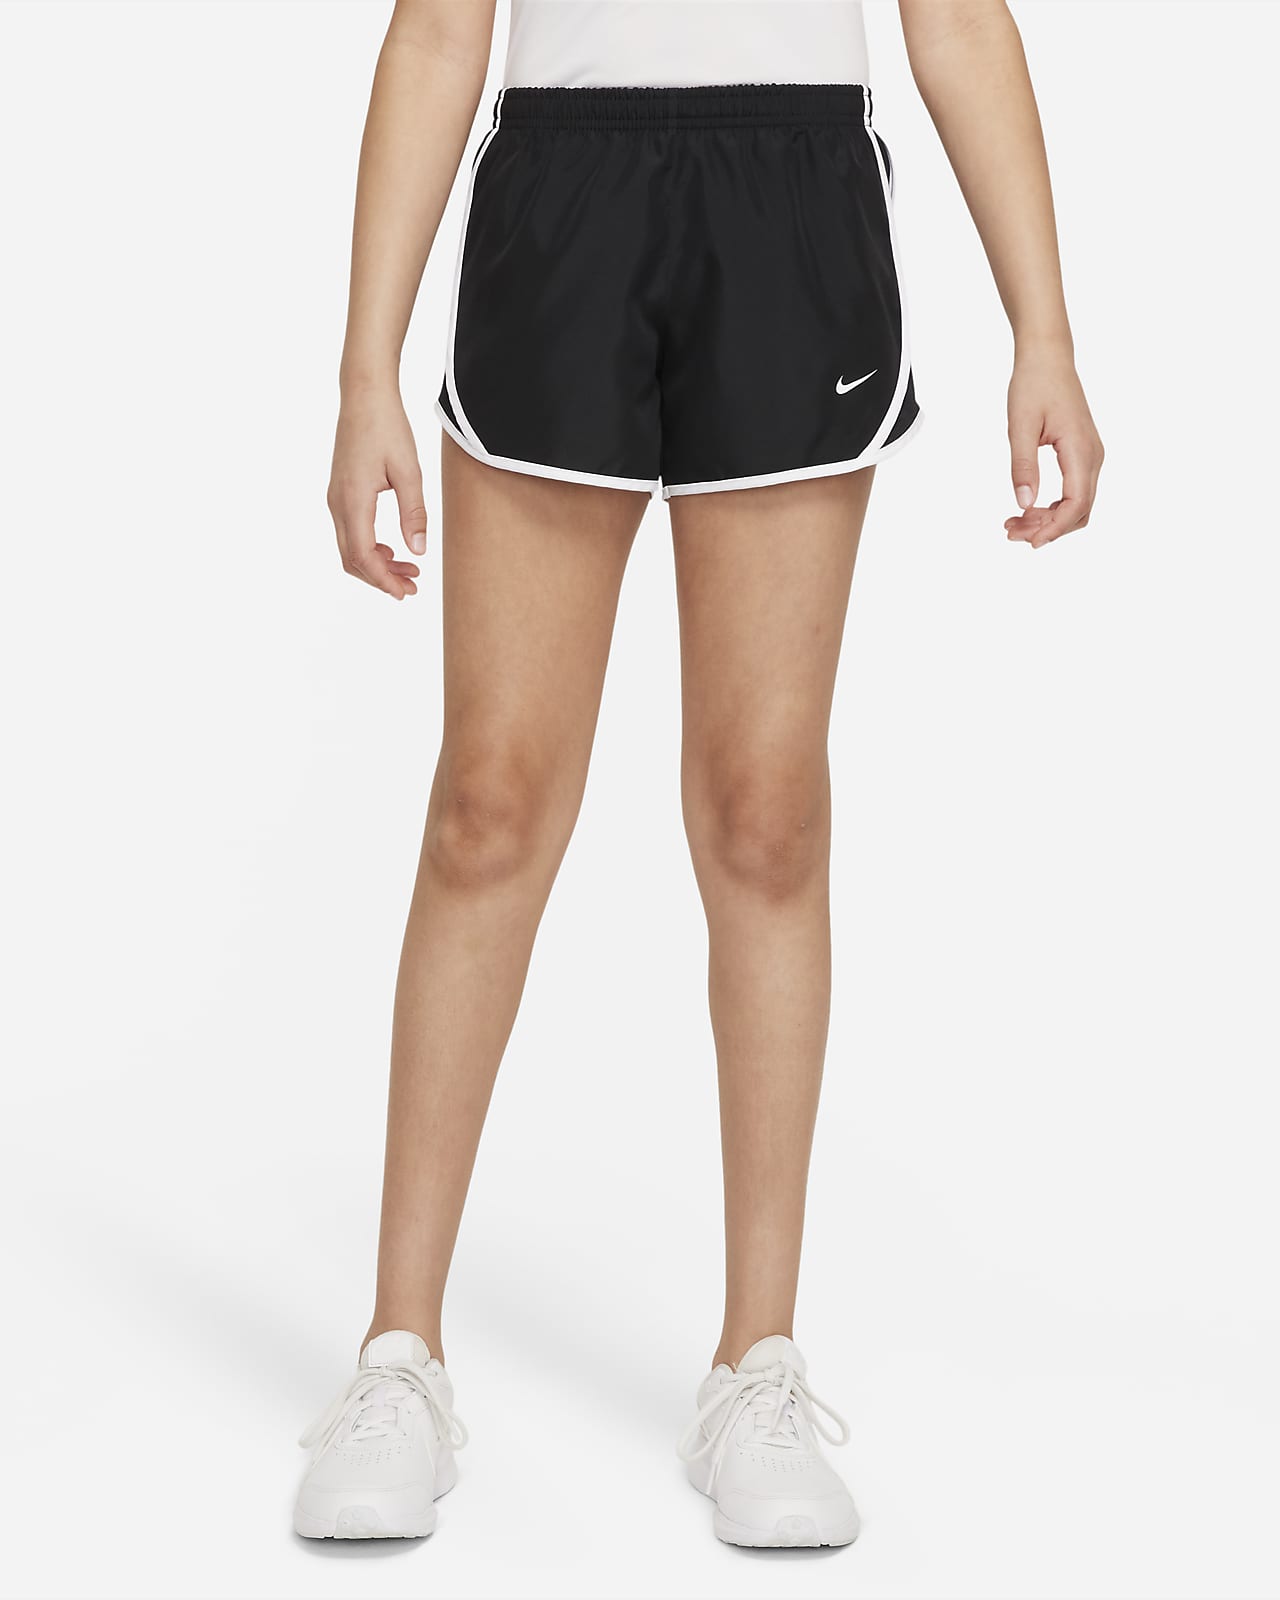 NIKE Girls Dry Tempo Sport Shorts 848196-061 Anthracite Dark Grey ( XS ) 